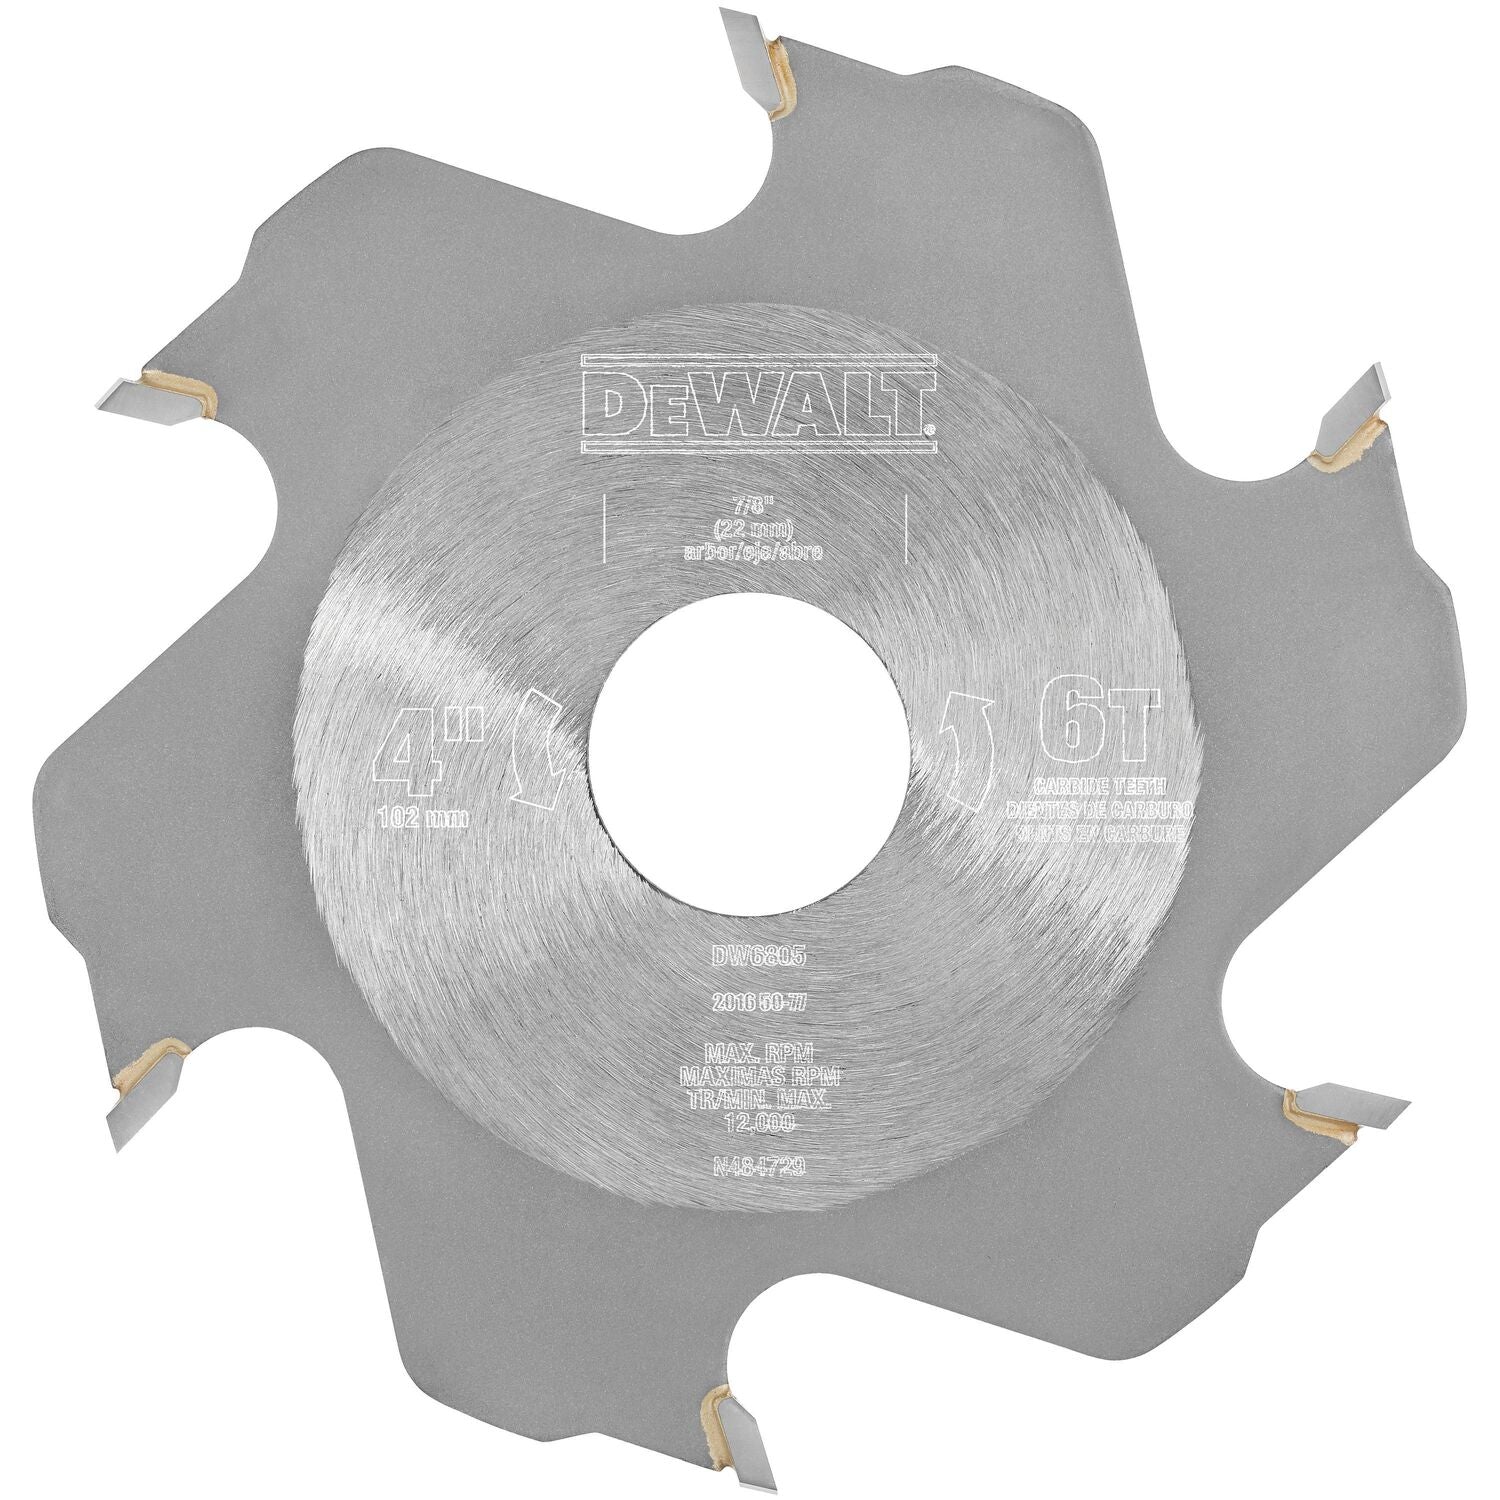 Dewalt DW6805 - 4-Inch 6 Tooth Carbide Plate Joiner Blade